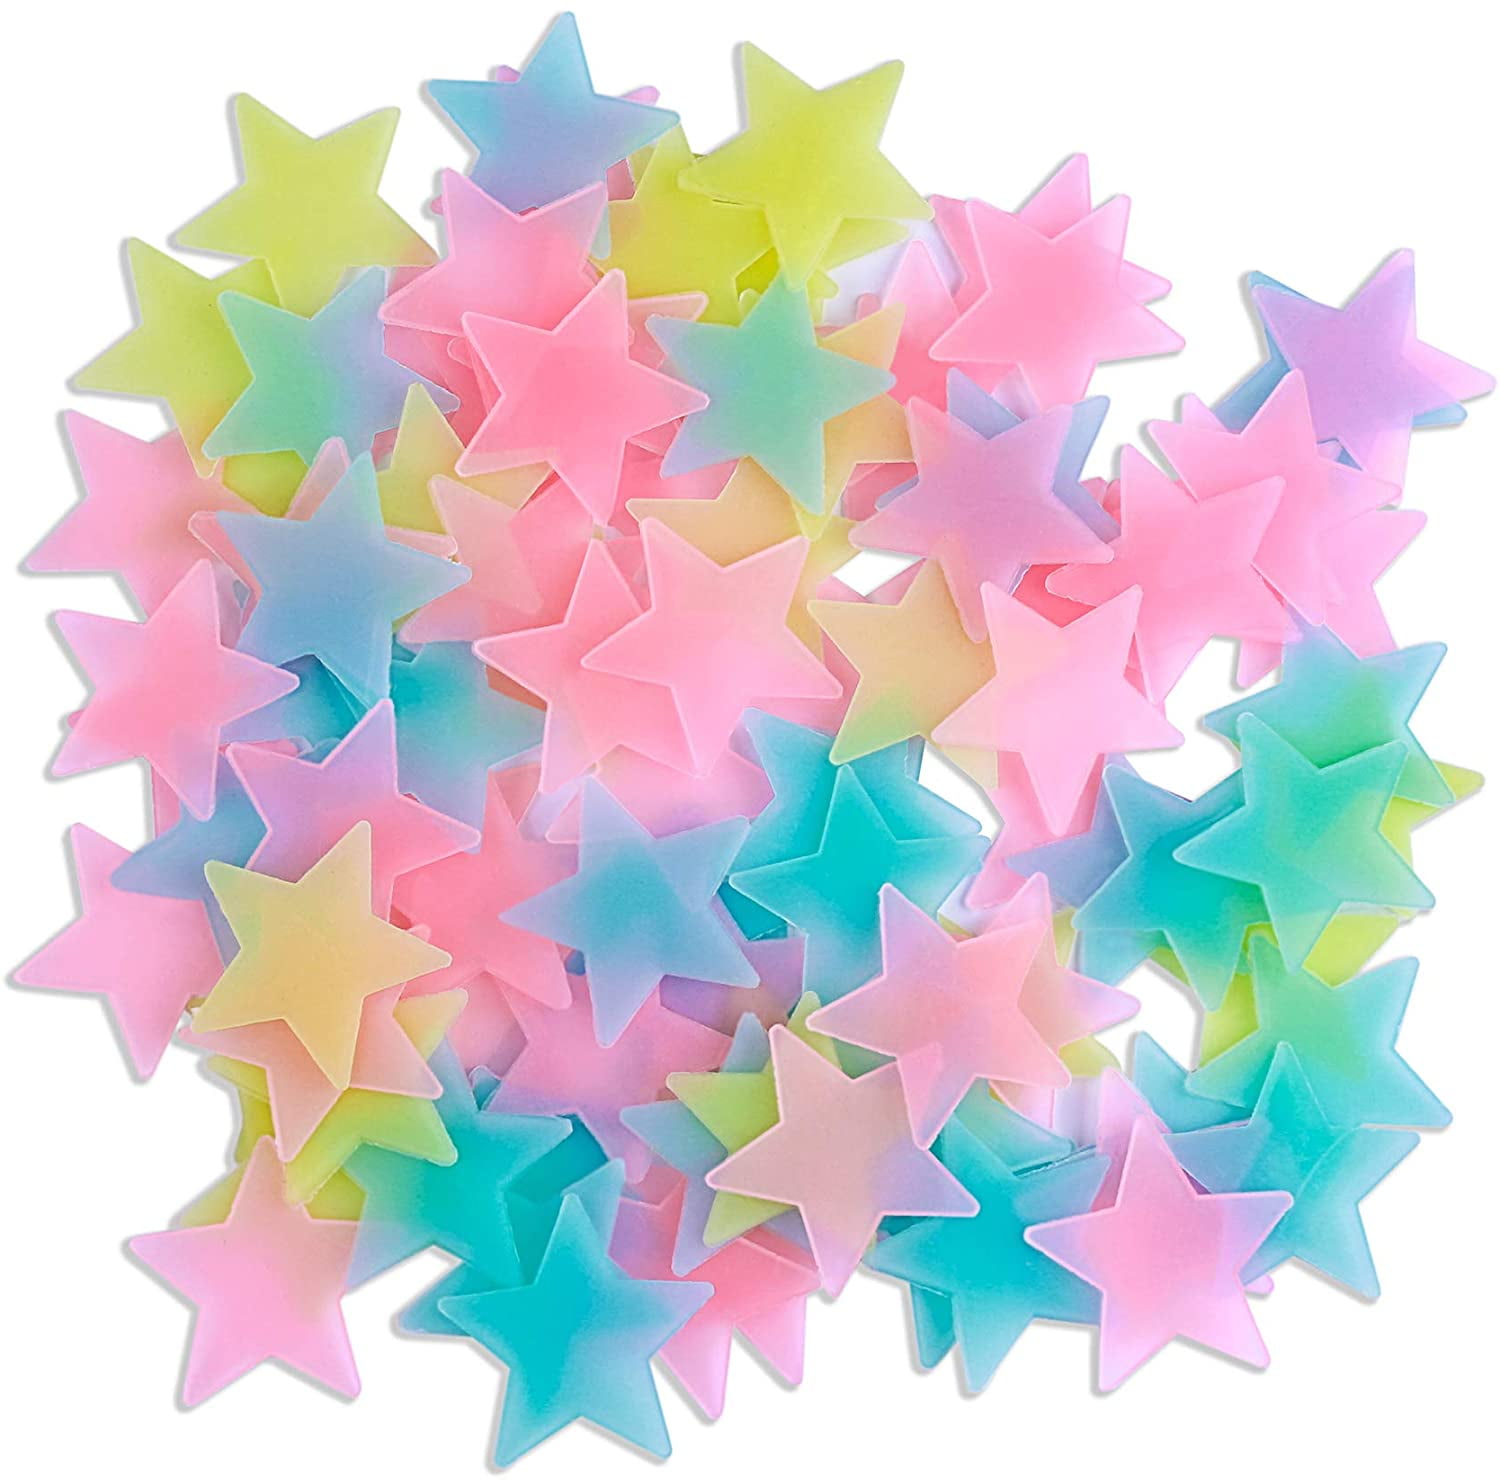 50 X 3D Stars Glow in the Dark Luminous Fluorescent plastique Wall Stickers DECOR